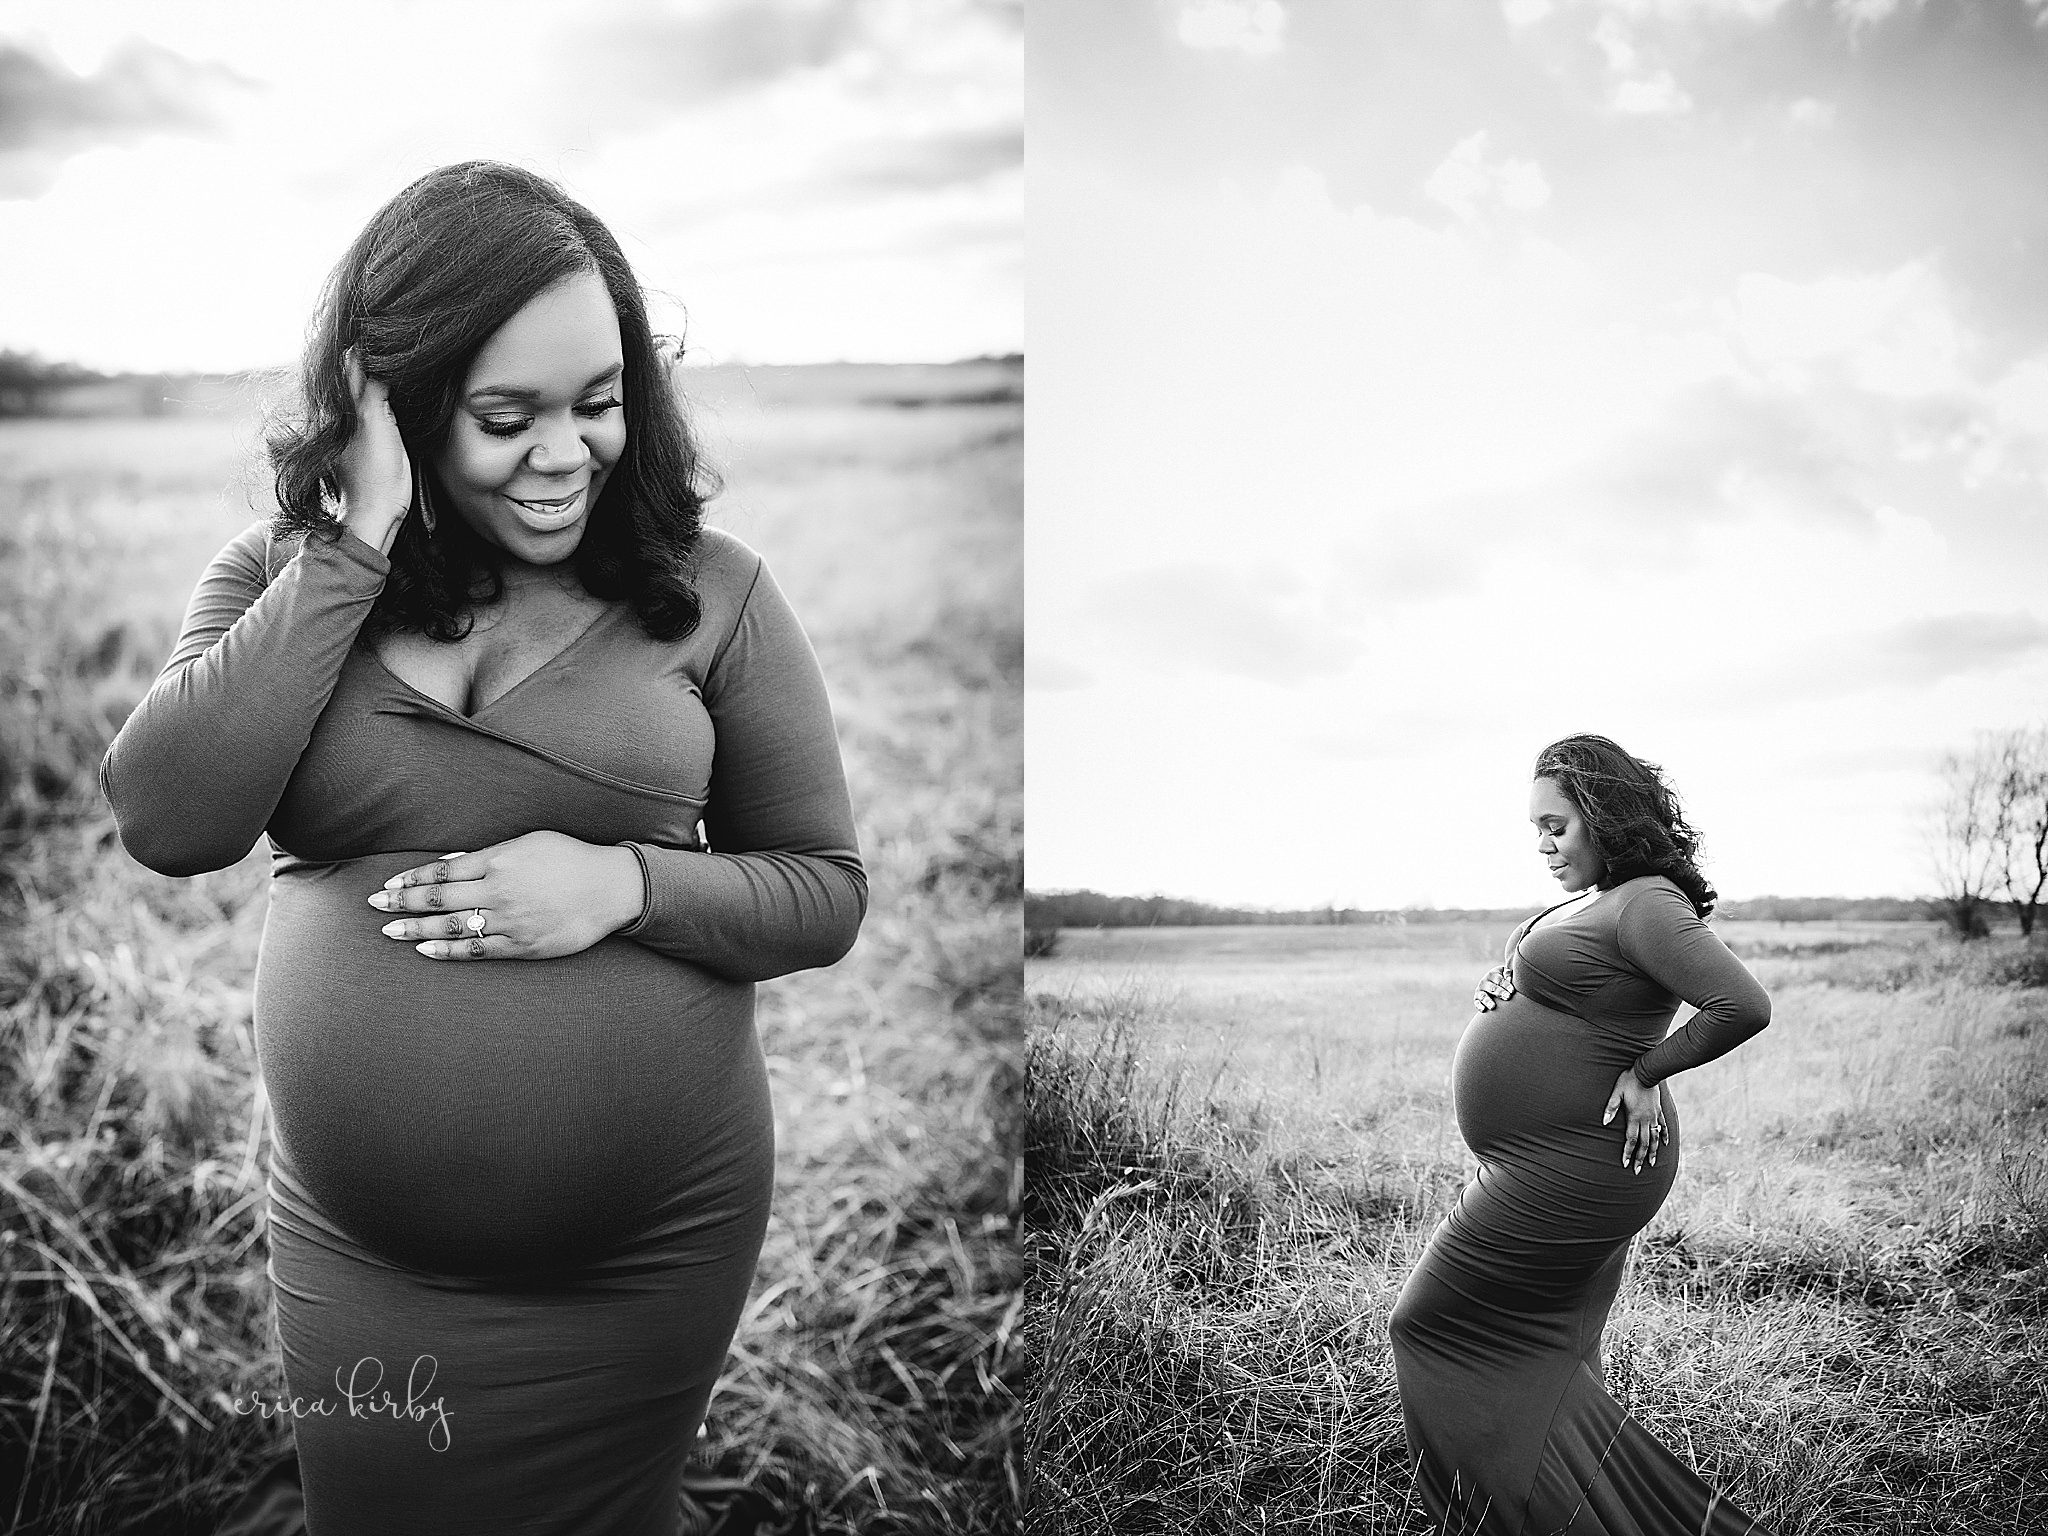 Northwest Arkansas Maternity Photographers - maternity session in nwa field at sunset - erica kirby photography bentonville ar newborn pregnancy photographer